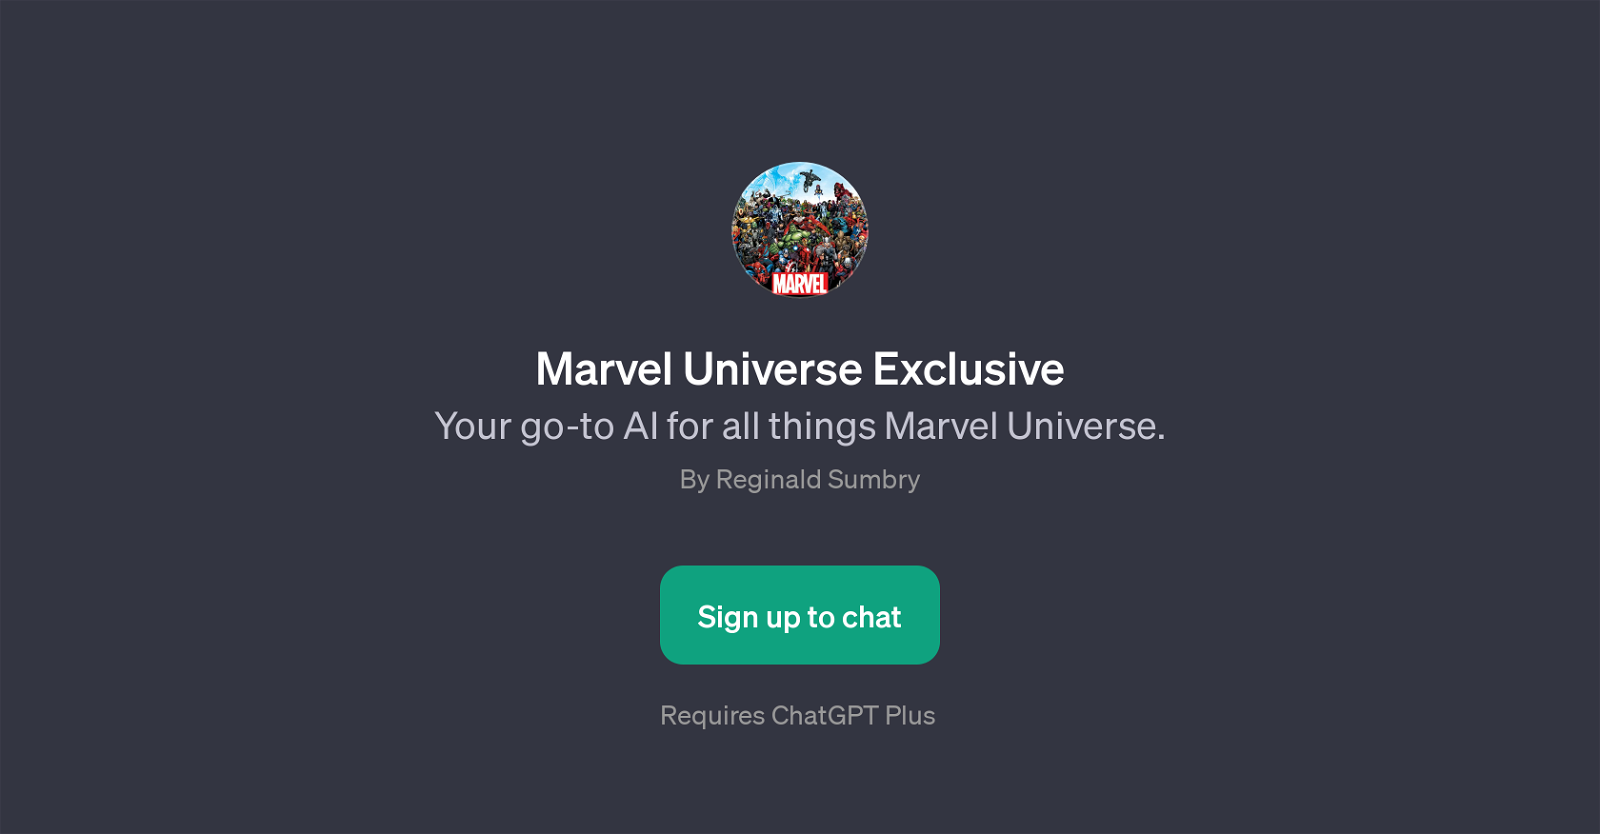 Marvel Universe Exclusive website